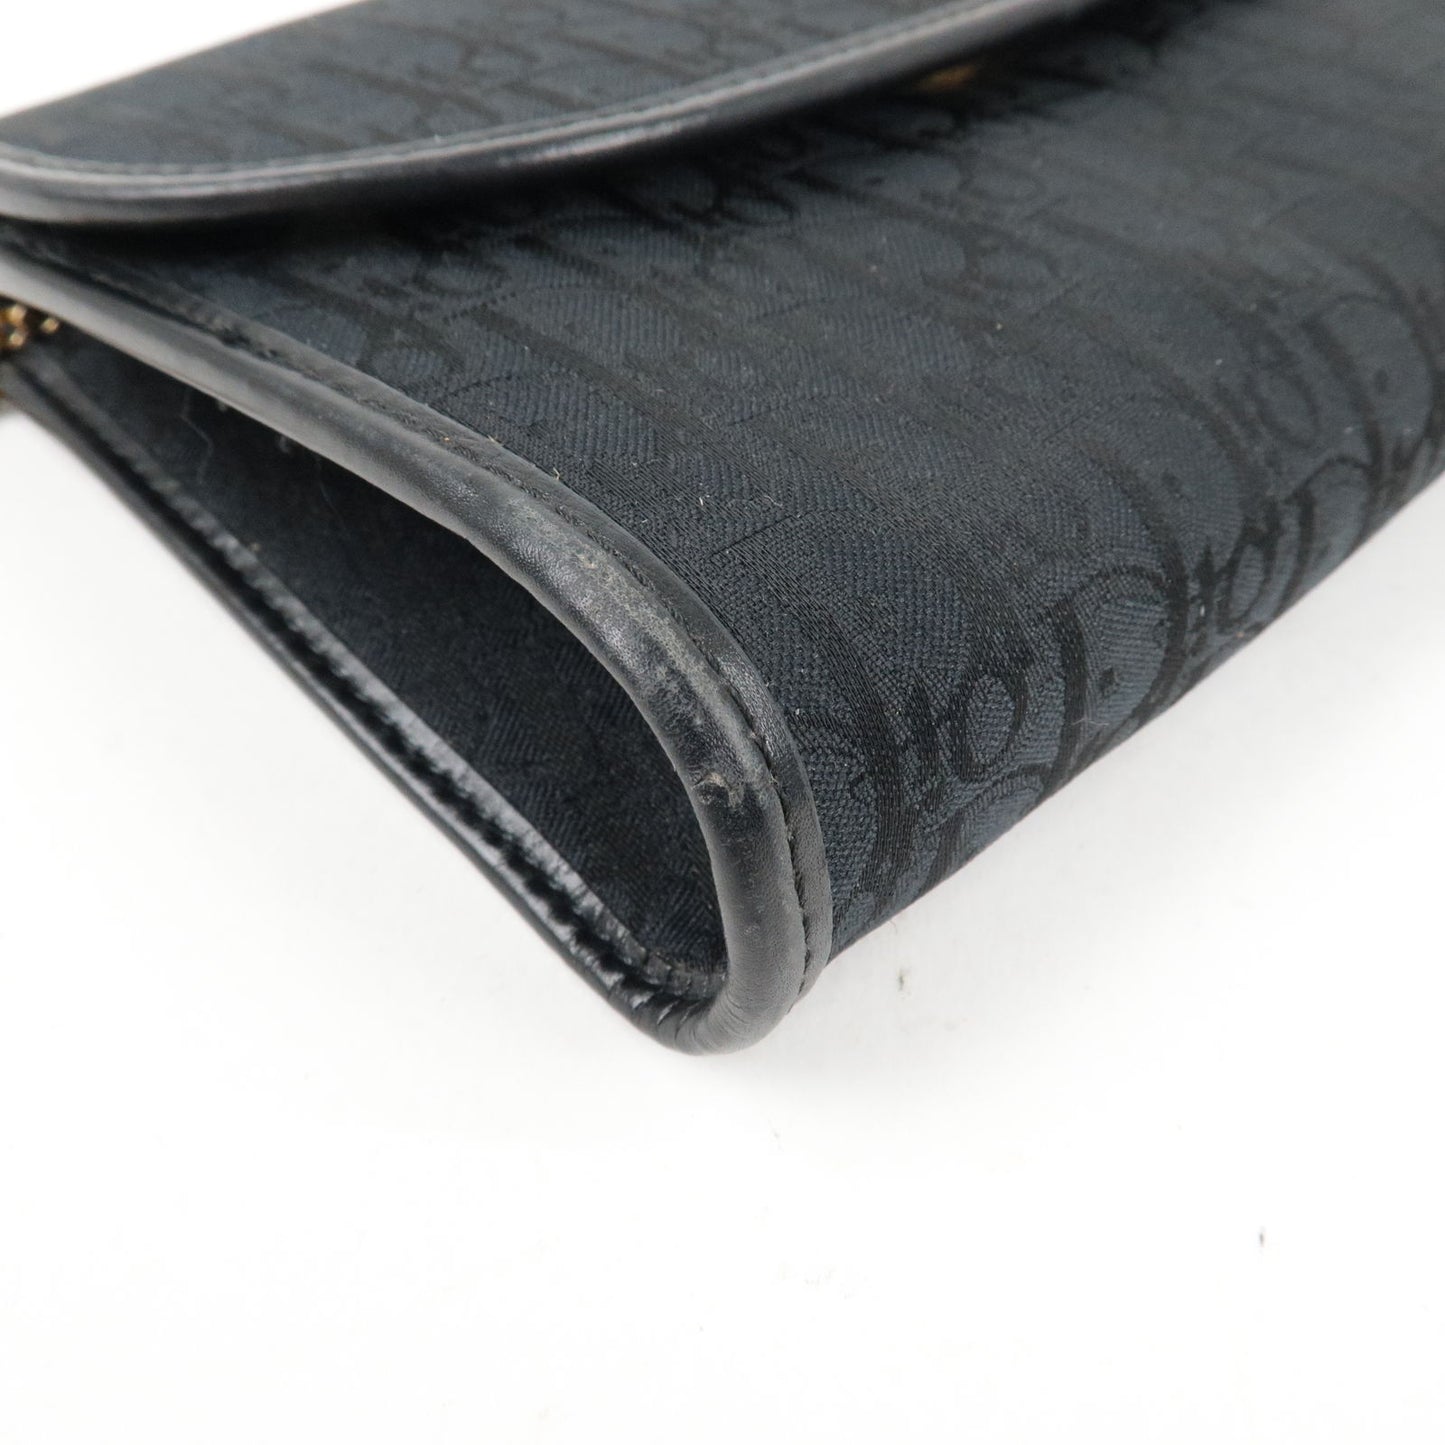 Christian Dior Trotter Canvas Leather Chain Shoulder Bag Black